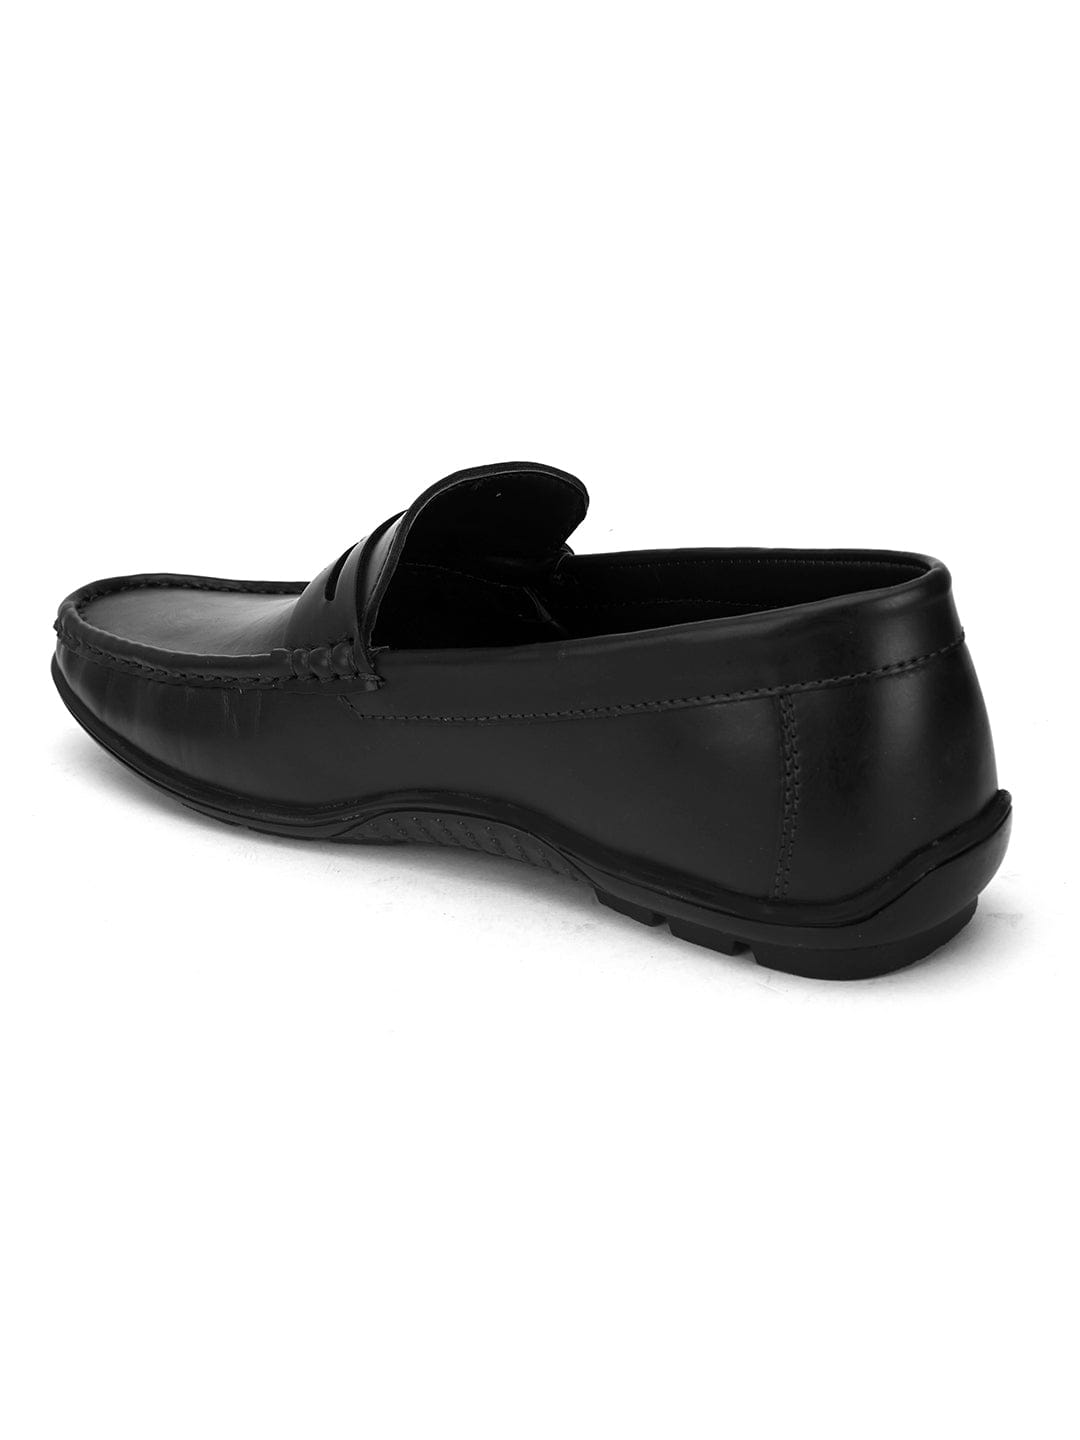 ESMEE Men's Casual Loafers